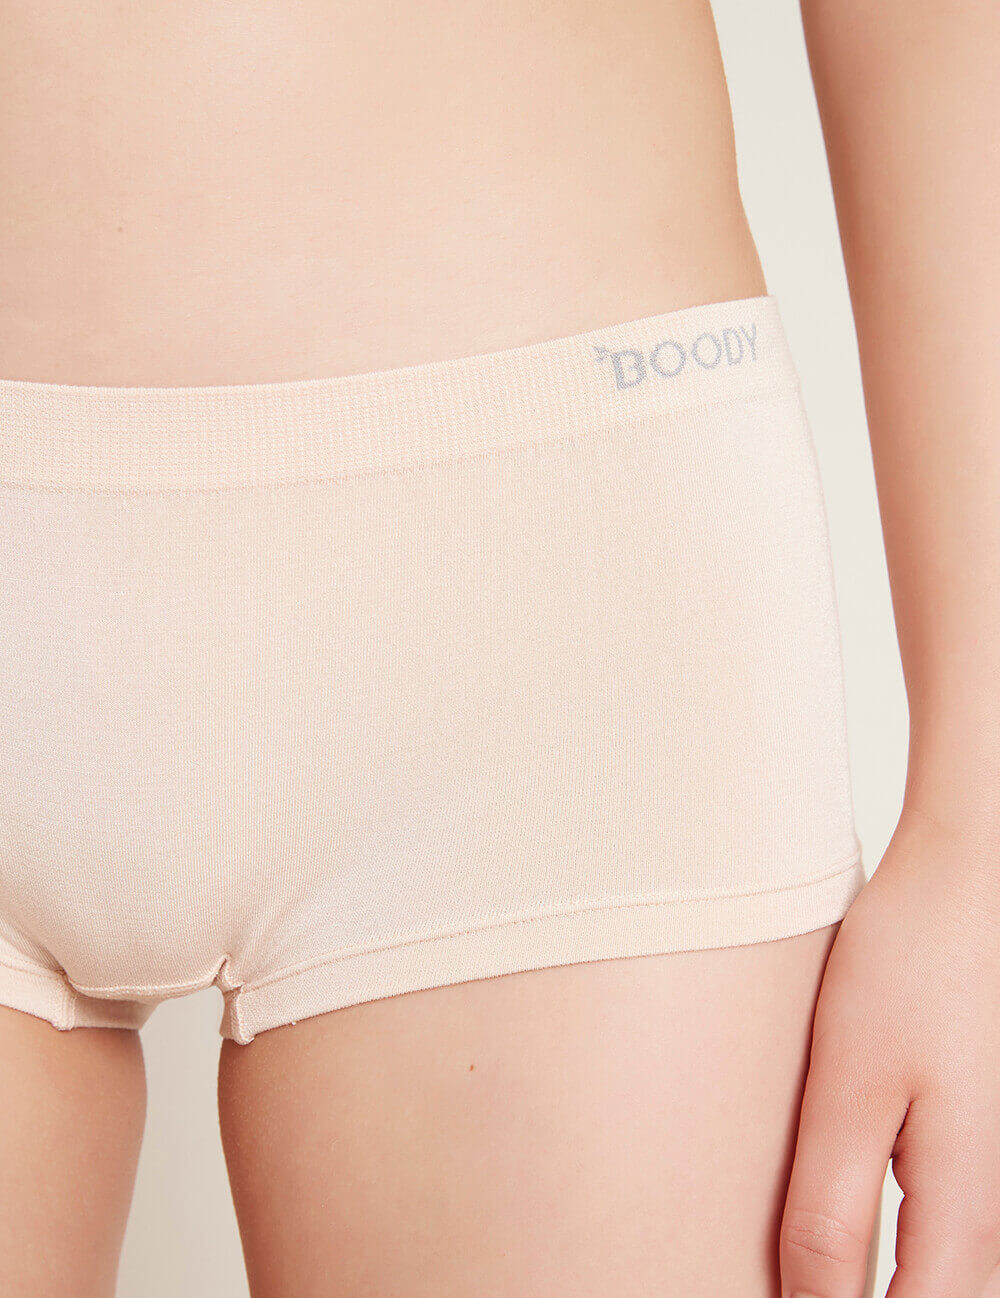 Boody Bamboo Boyleg Brief Boy Short Womens Underwear in Nude 0 Close Up